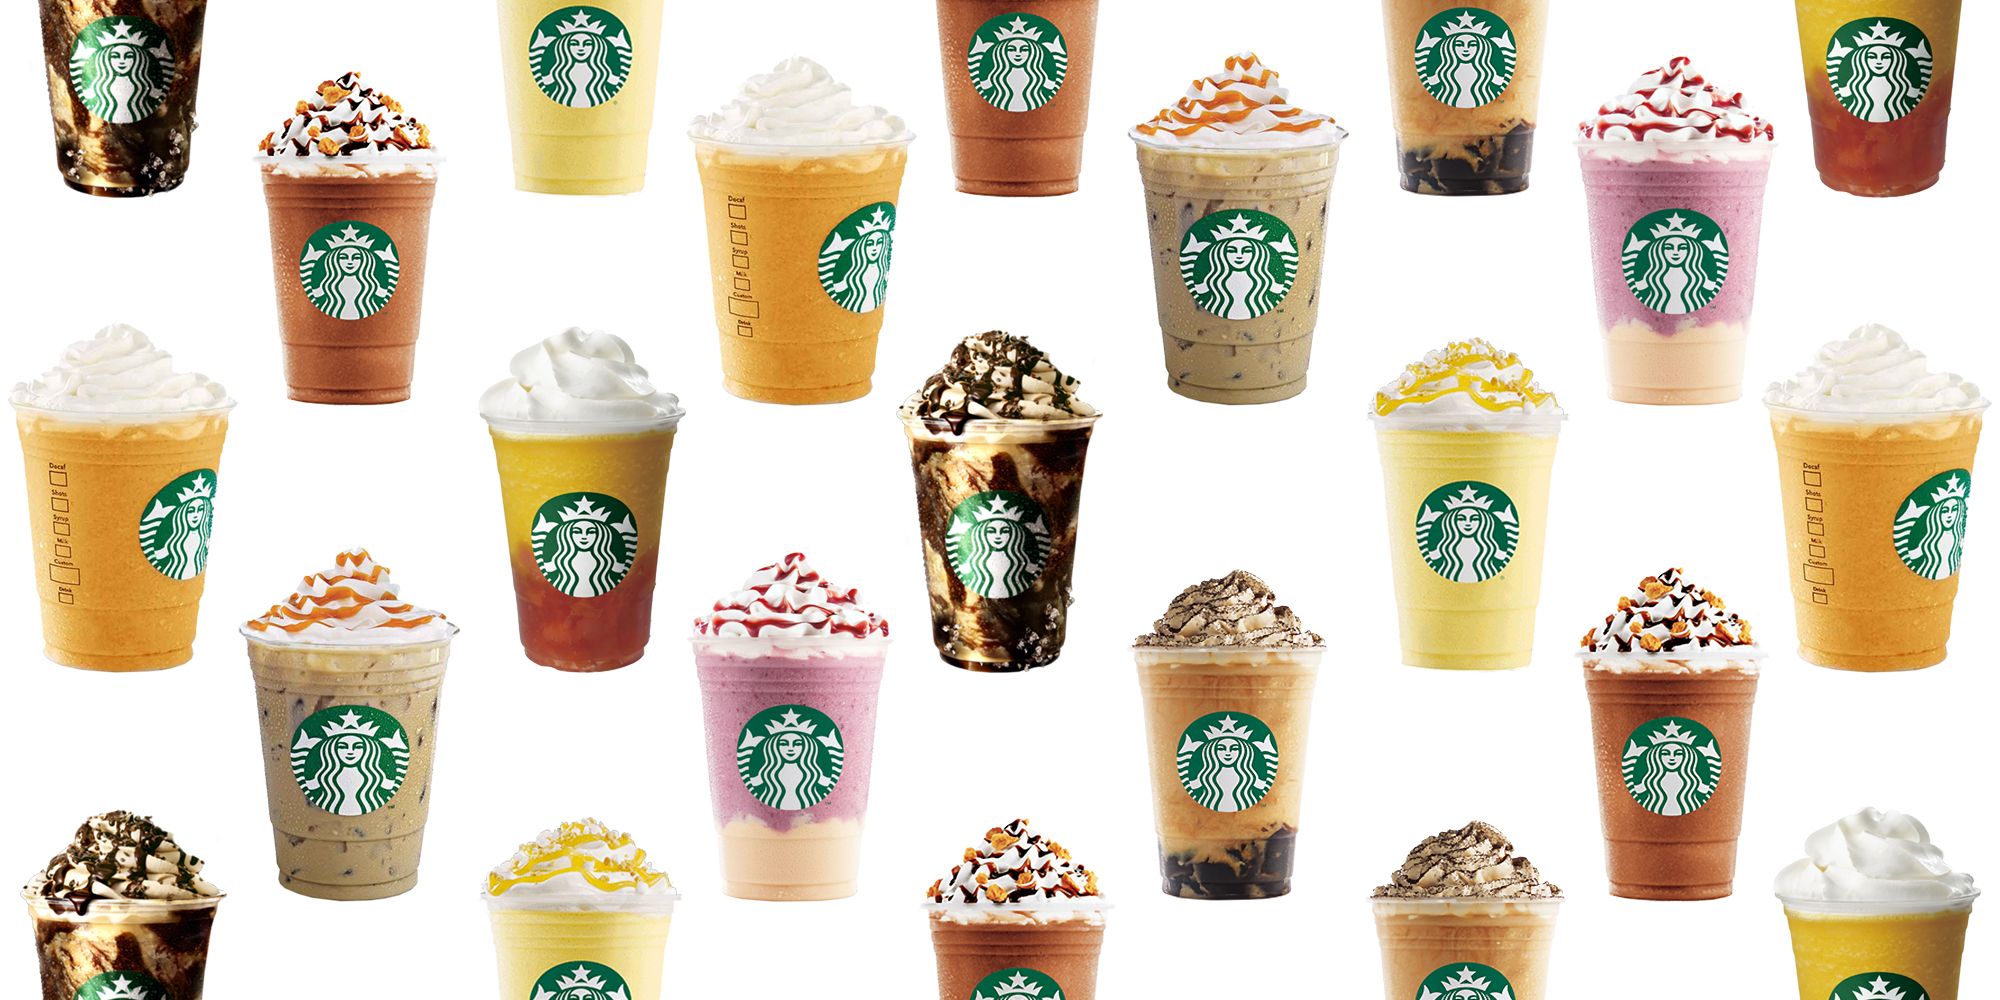 Best Starbucks Drinks on the Menu: All 40 Drinks, Ranked - Thrillist